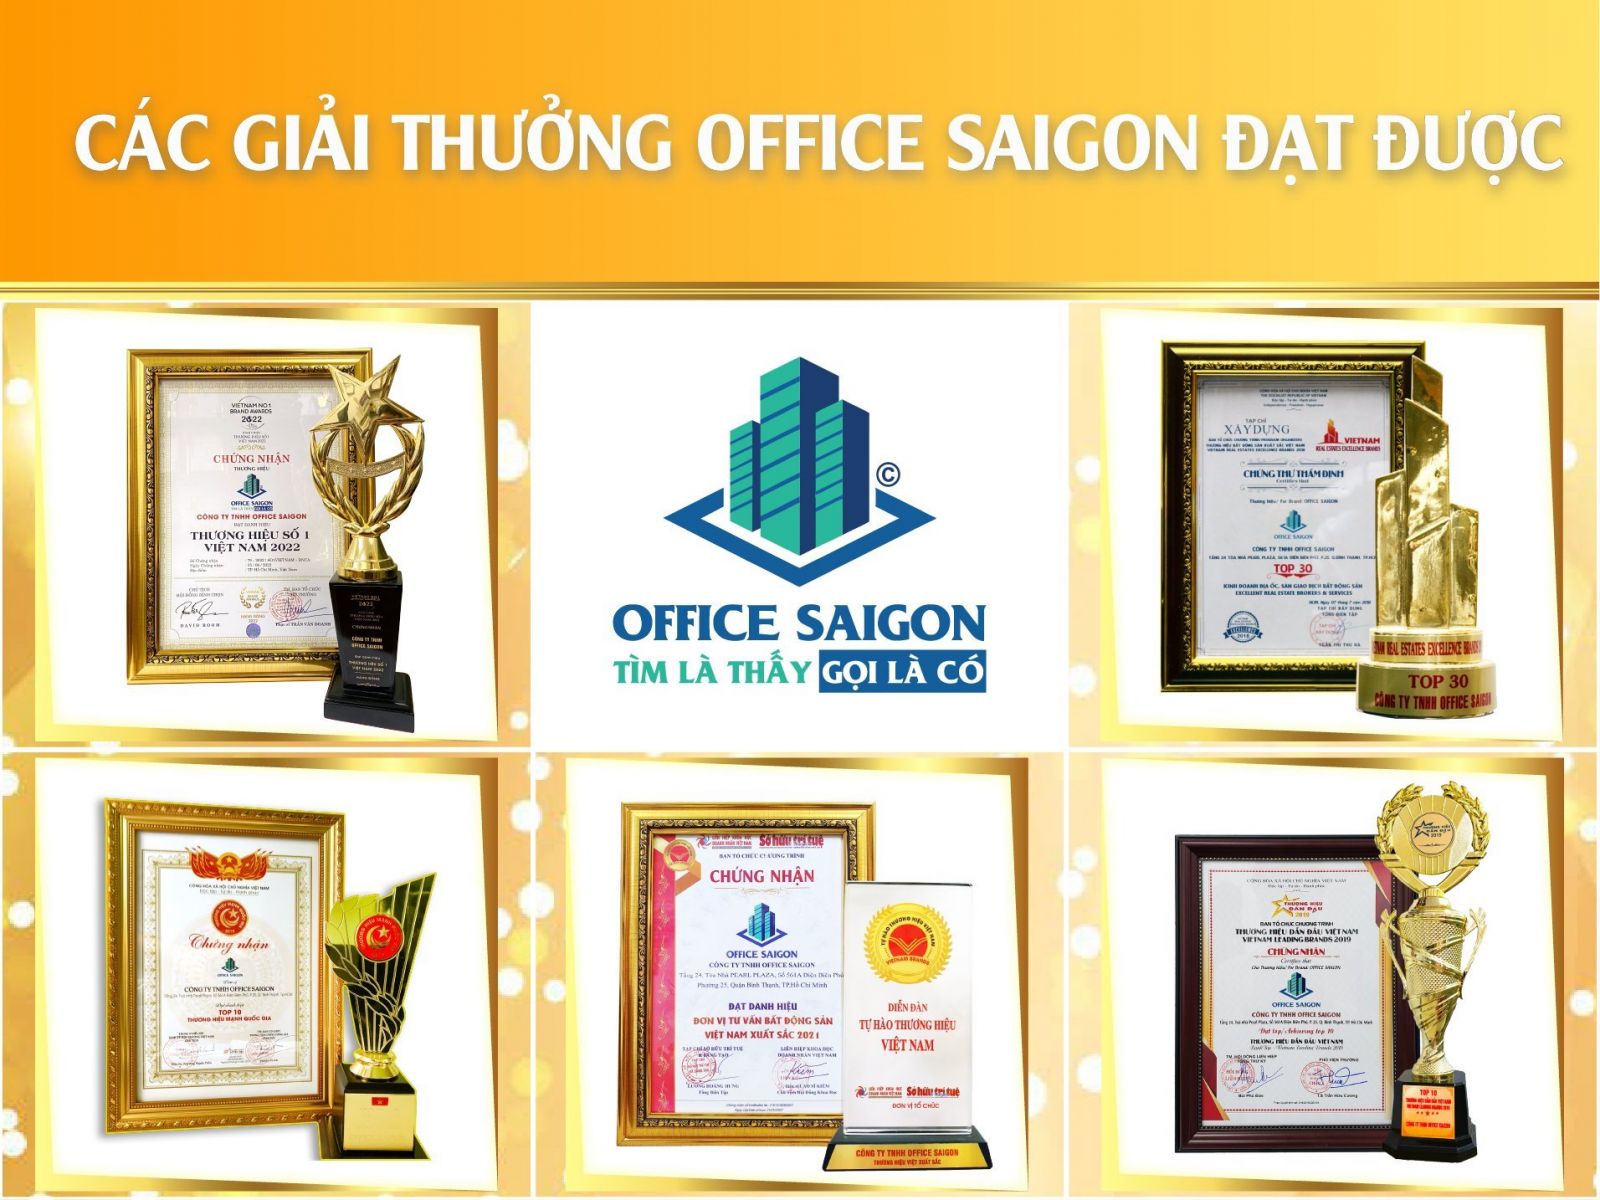 Giai thuong Office Saigon dat duoc